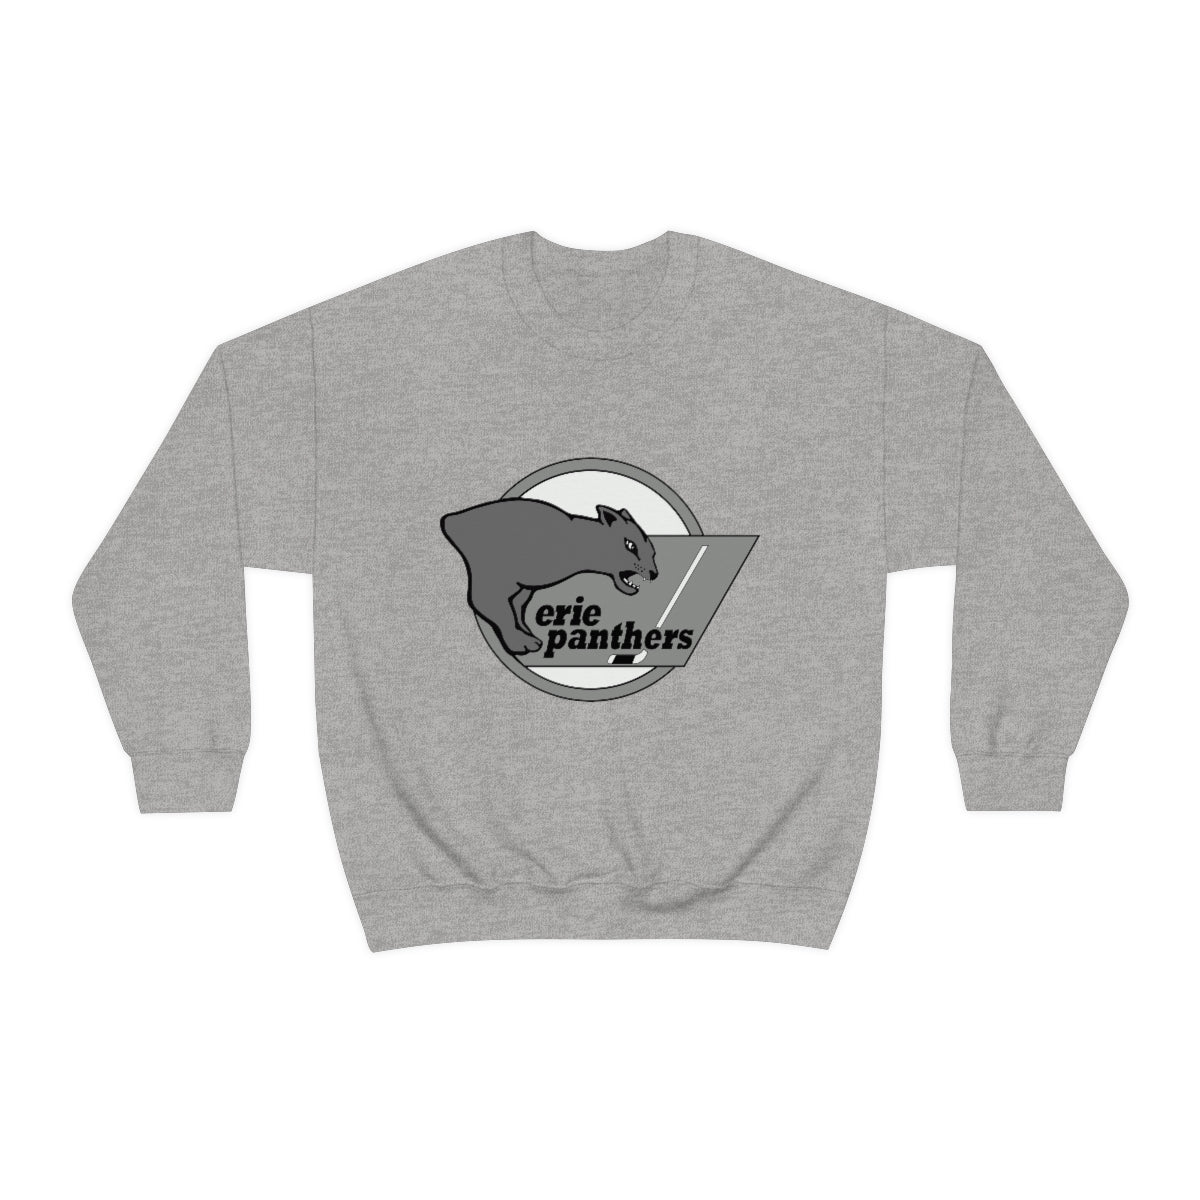 Erie Panthers Crewneck Sweatshirt